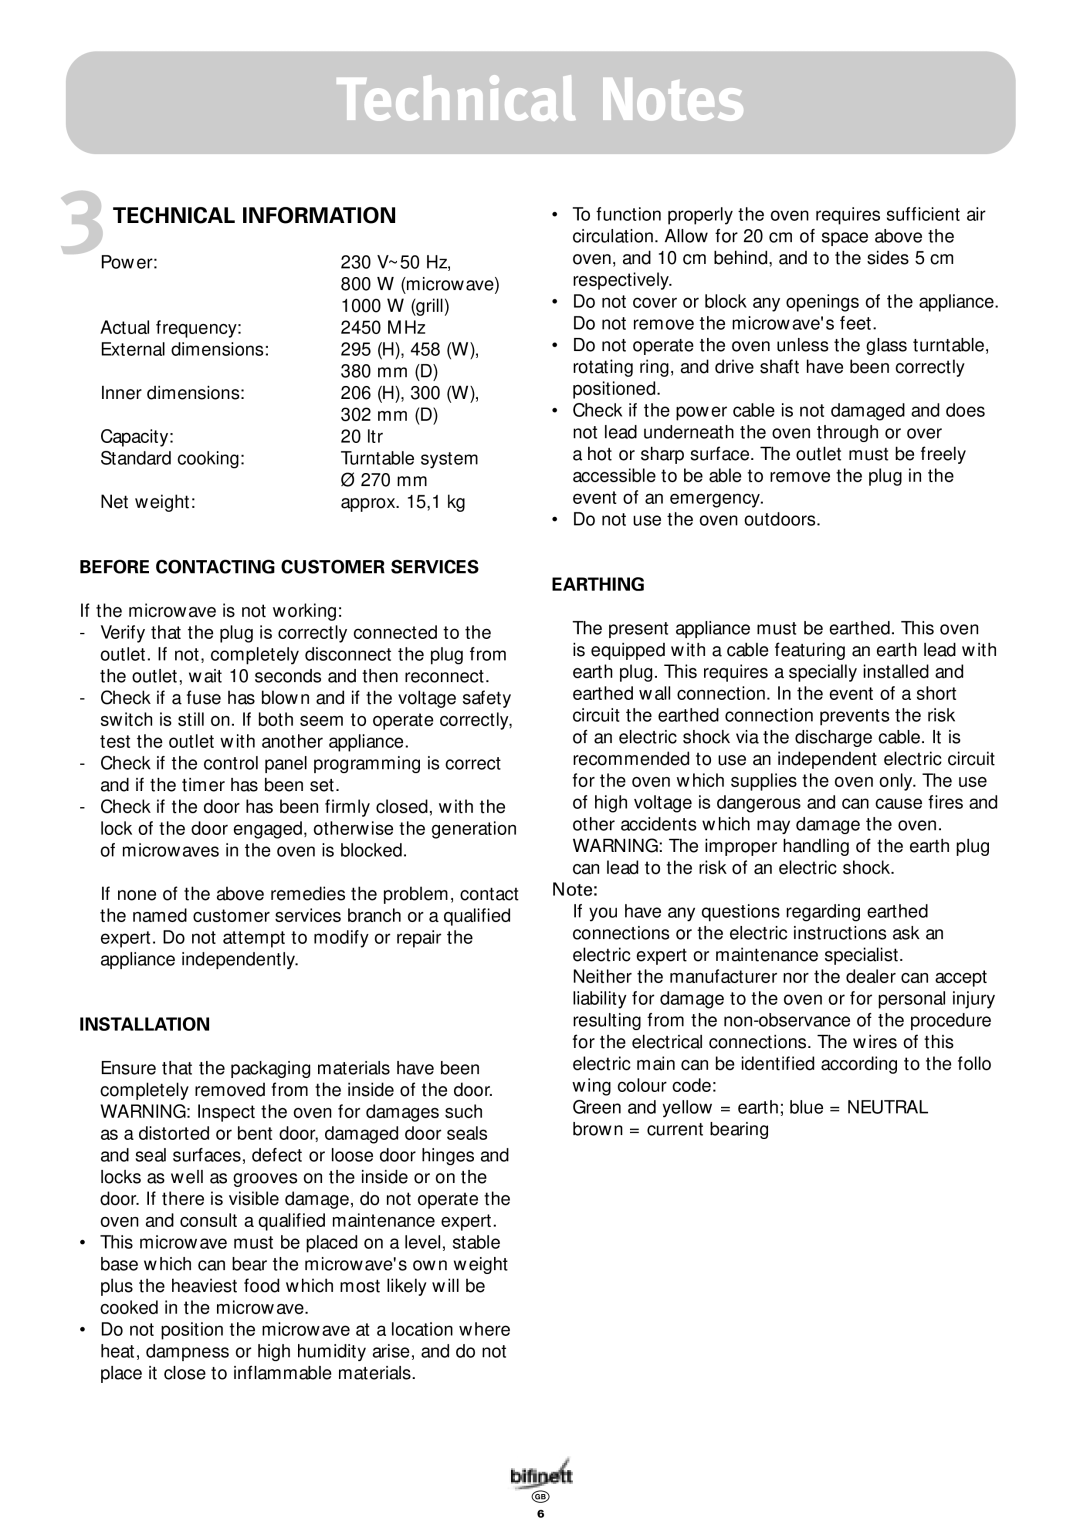 Bifinett KH 1108 manual Technical Notes, Technical Information 